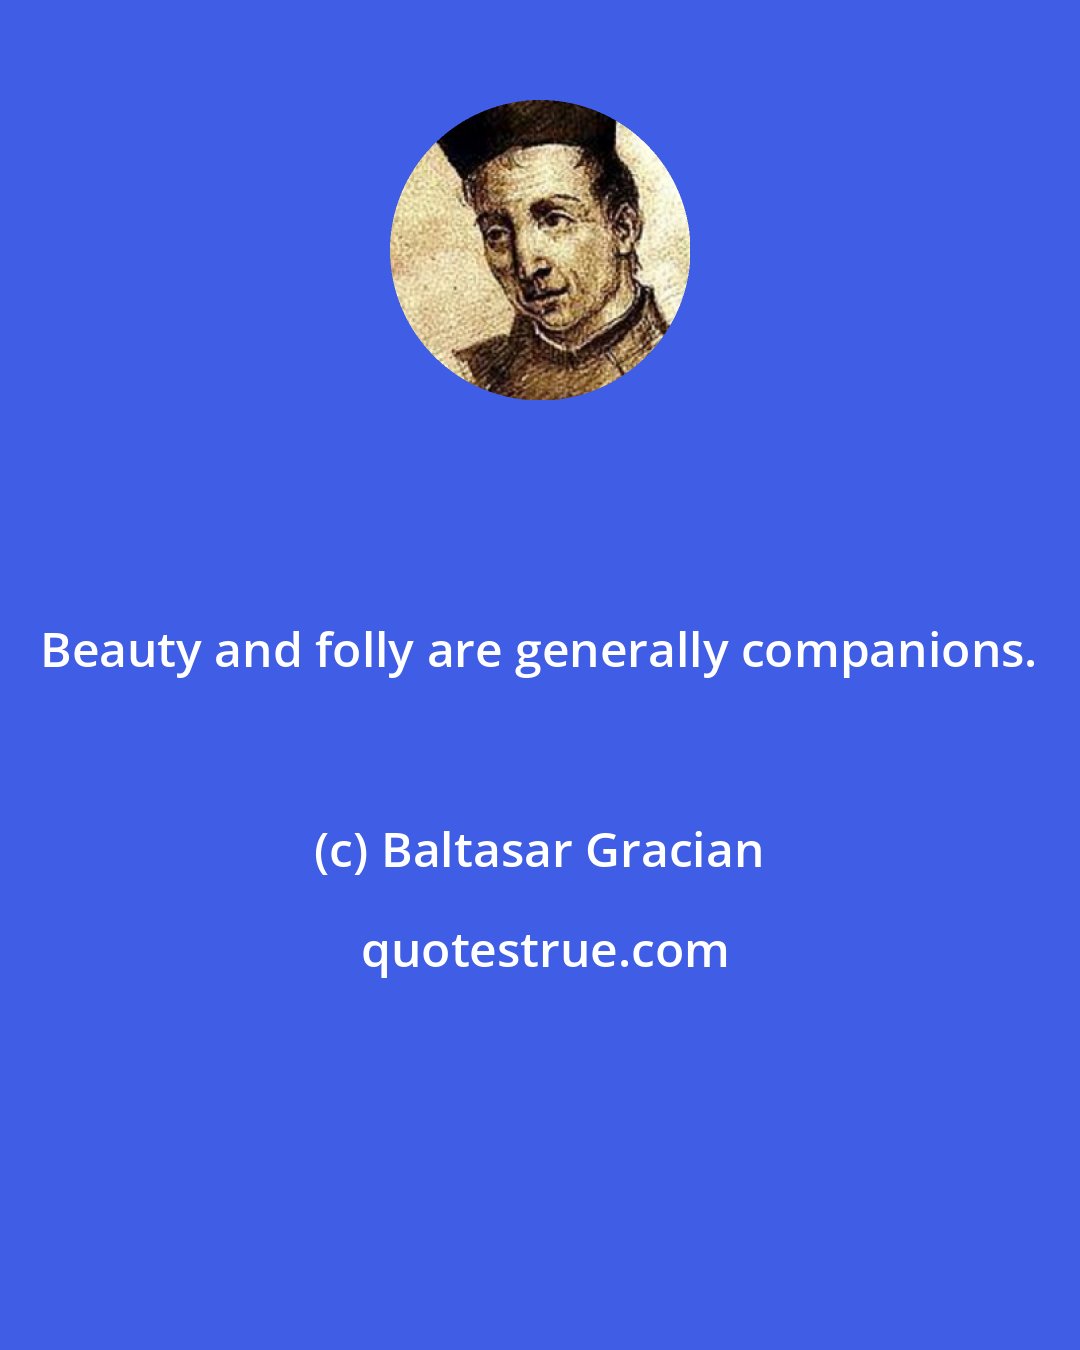 Baltasar Gracian: Beauty and folly are generally companions.